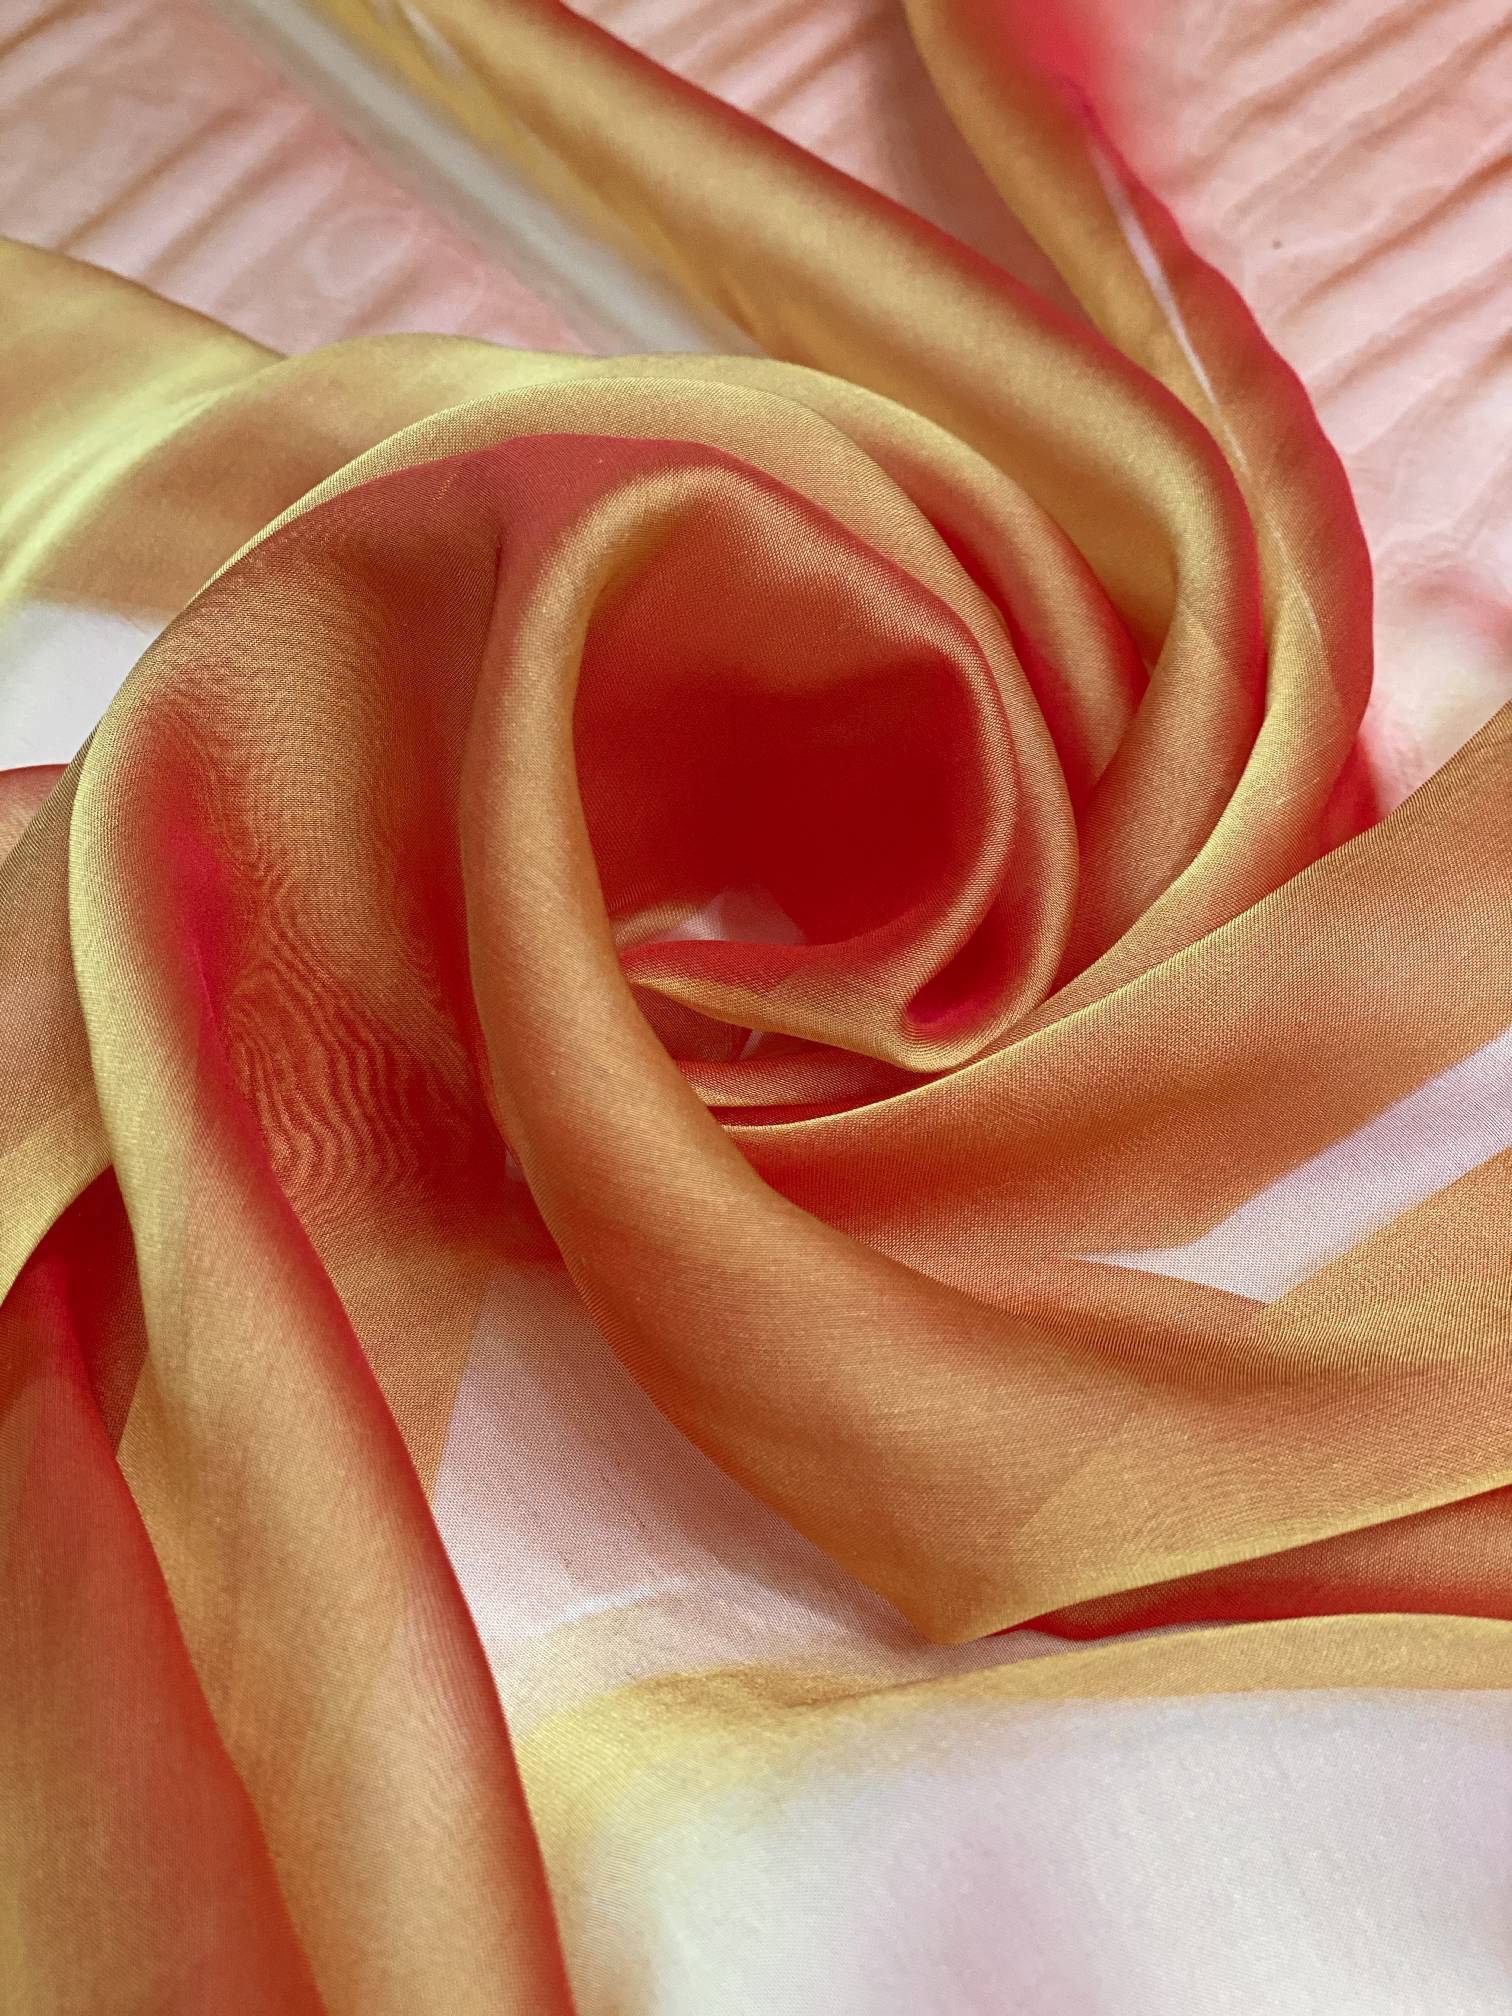 Sunset Gold Shantung Silk, 100% Silk Fabric, by The Yard, 54 Wide